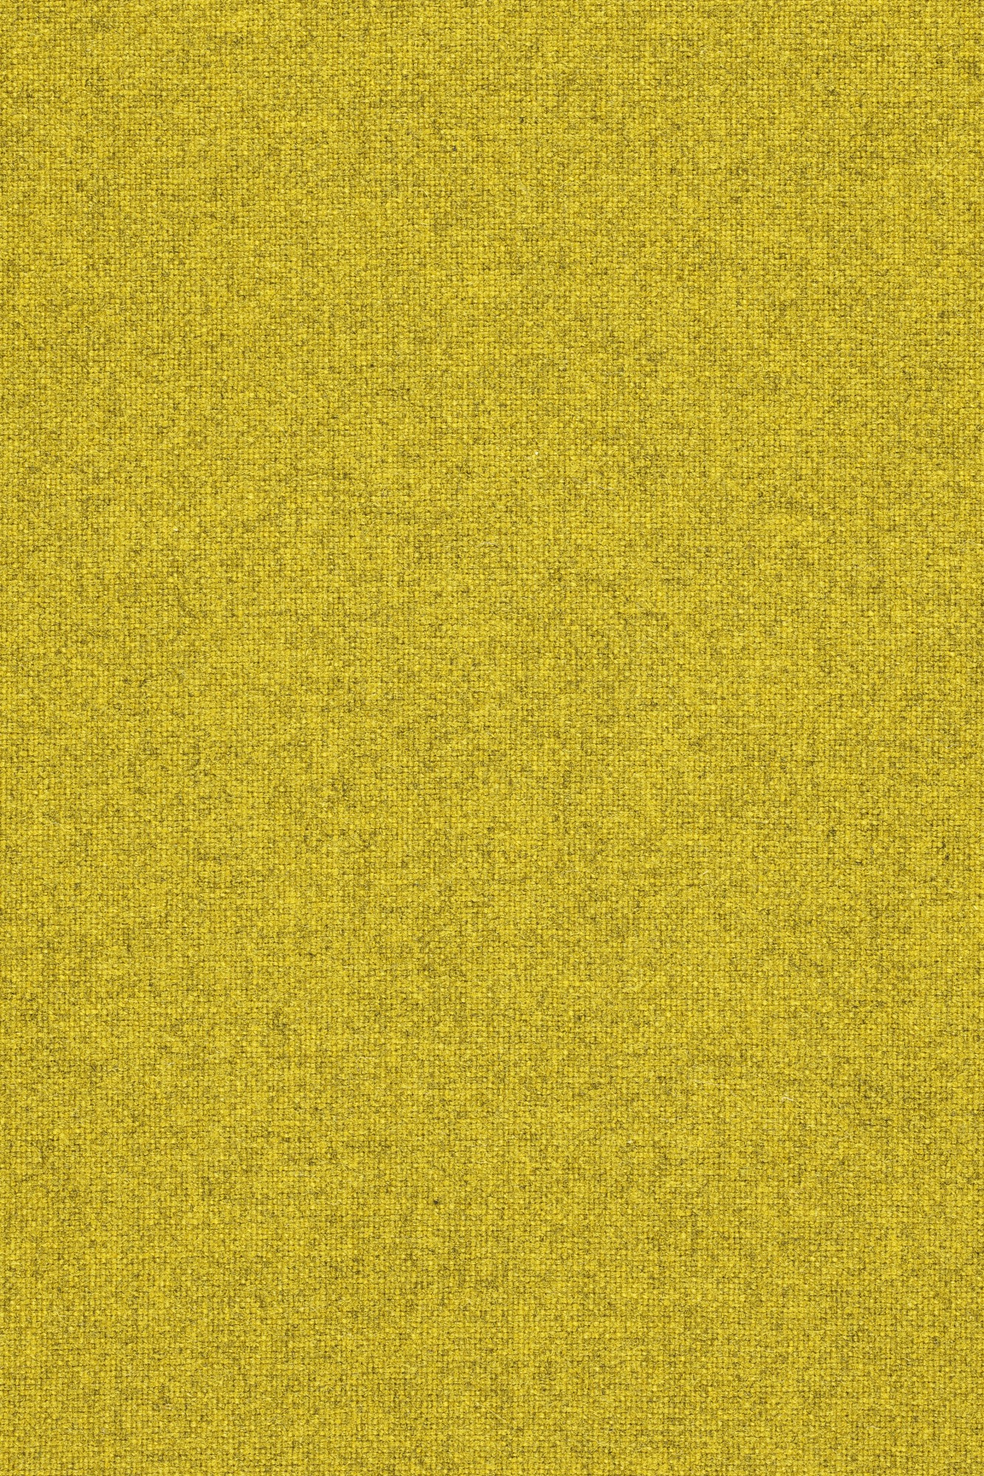 Fabric sample Tonica 2 411 yellow